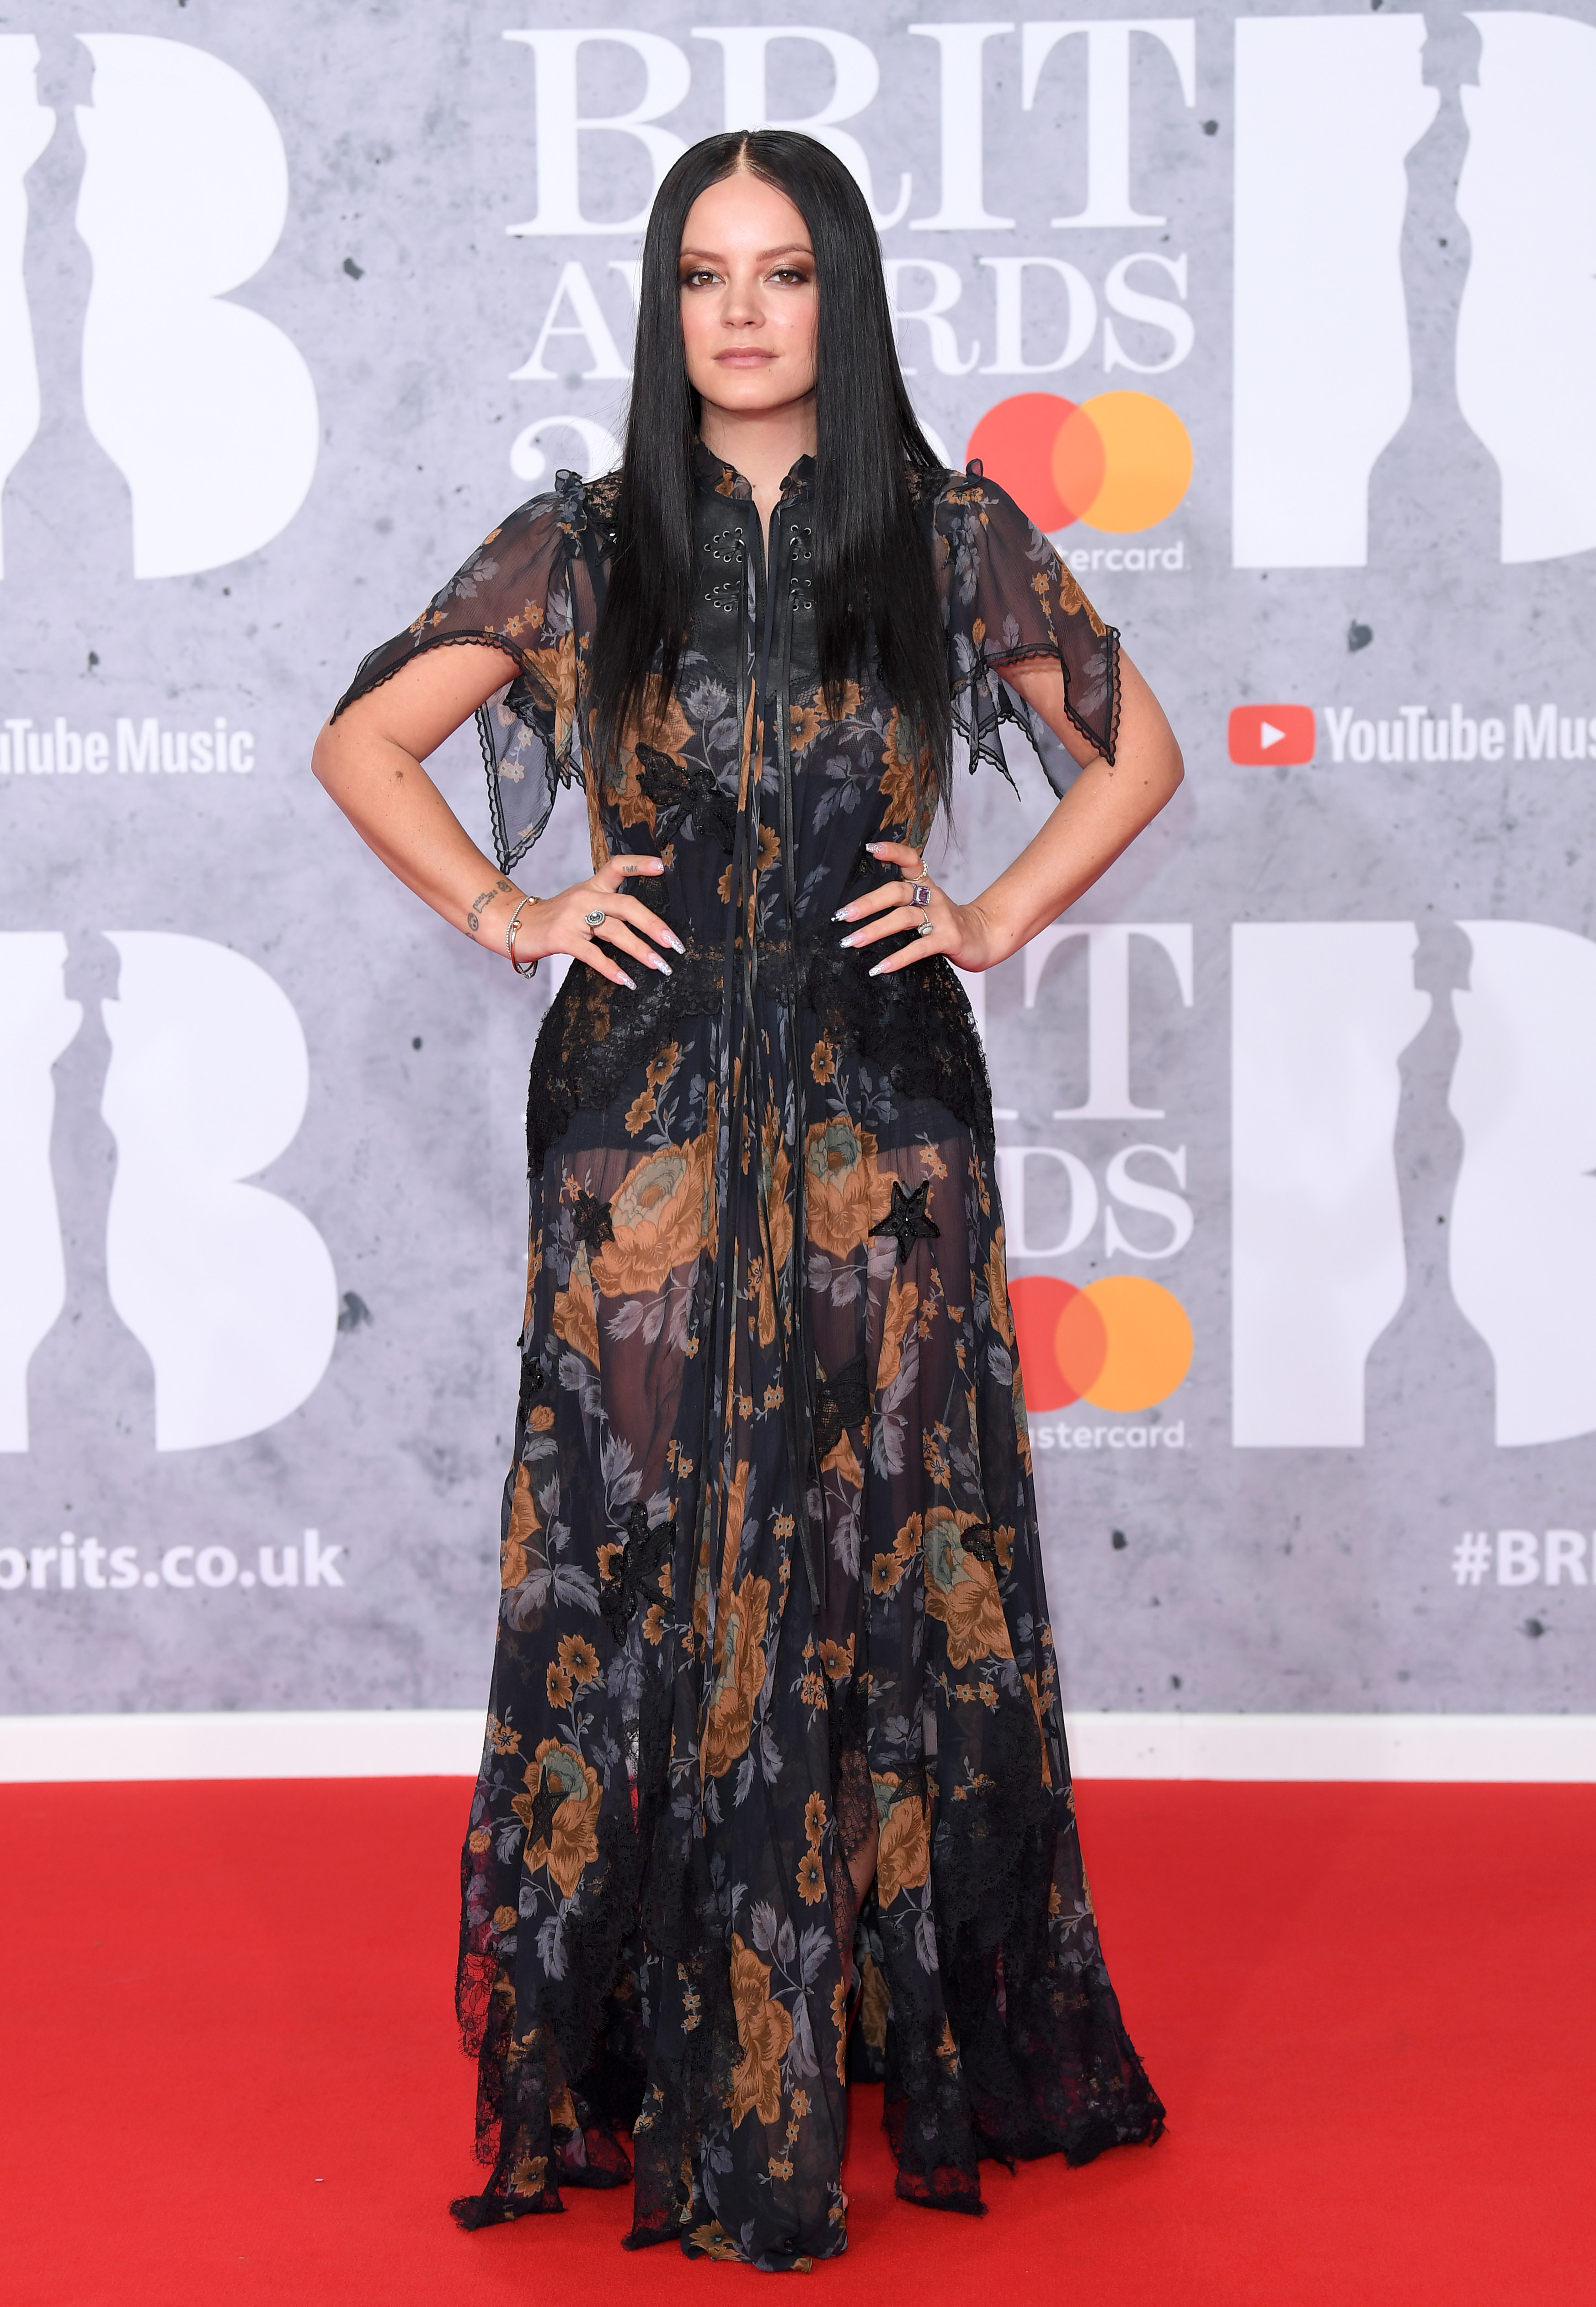 The BRIT Awards 2019 - Red Carpet Arrivals